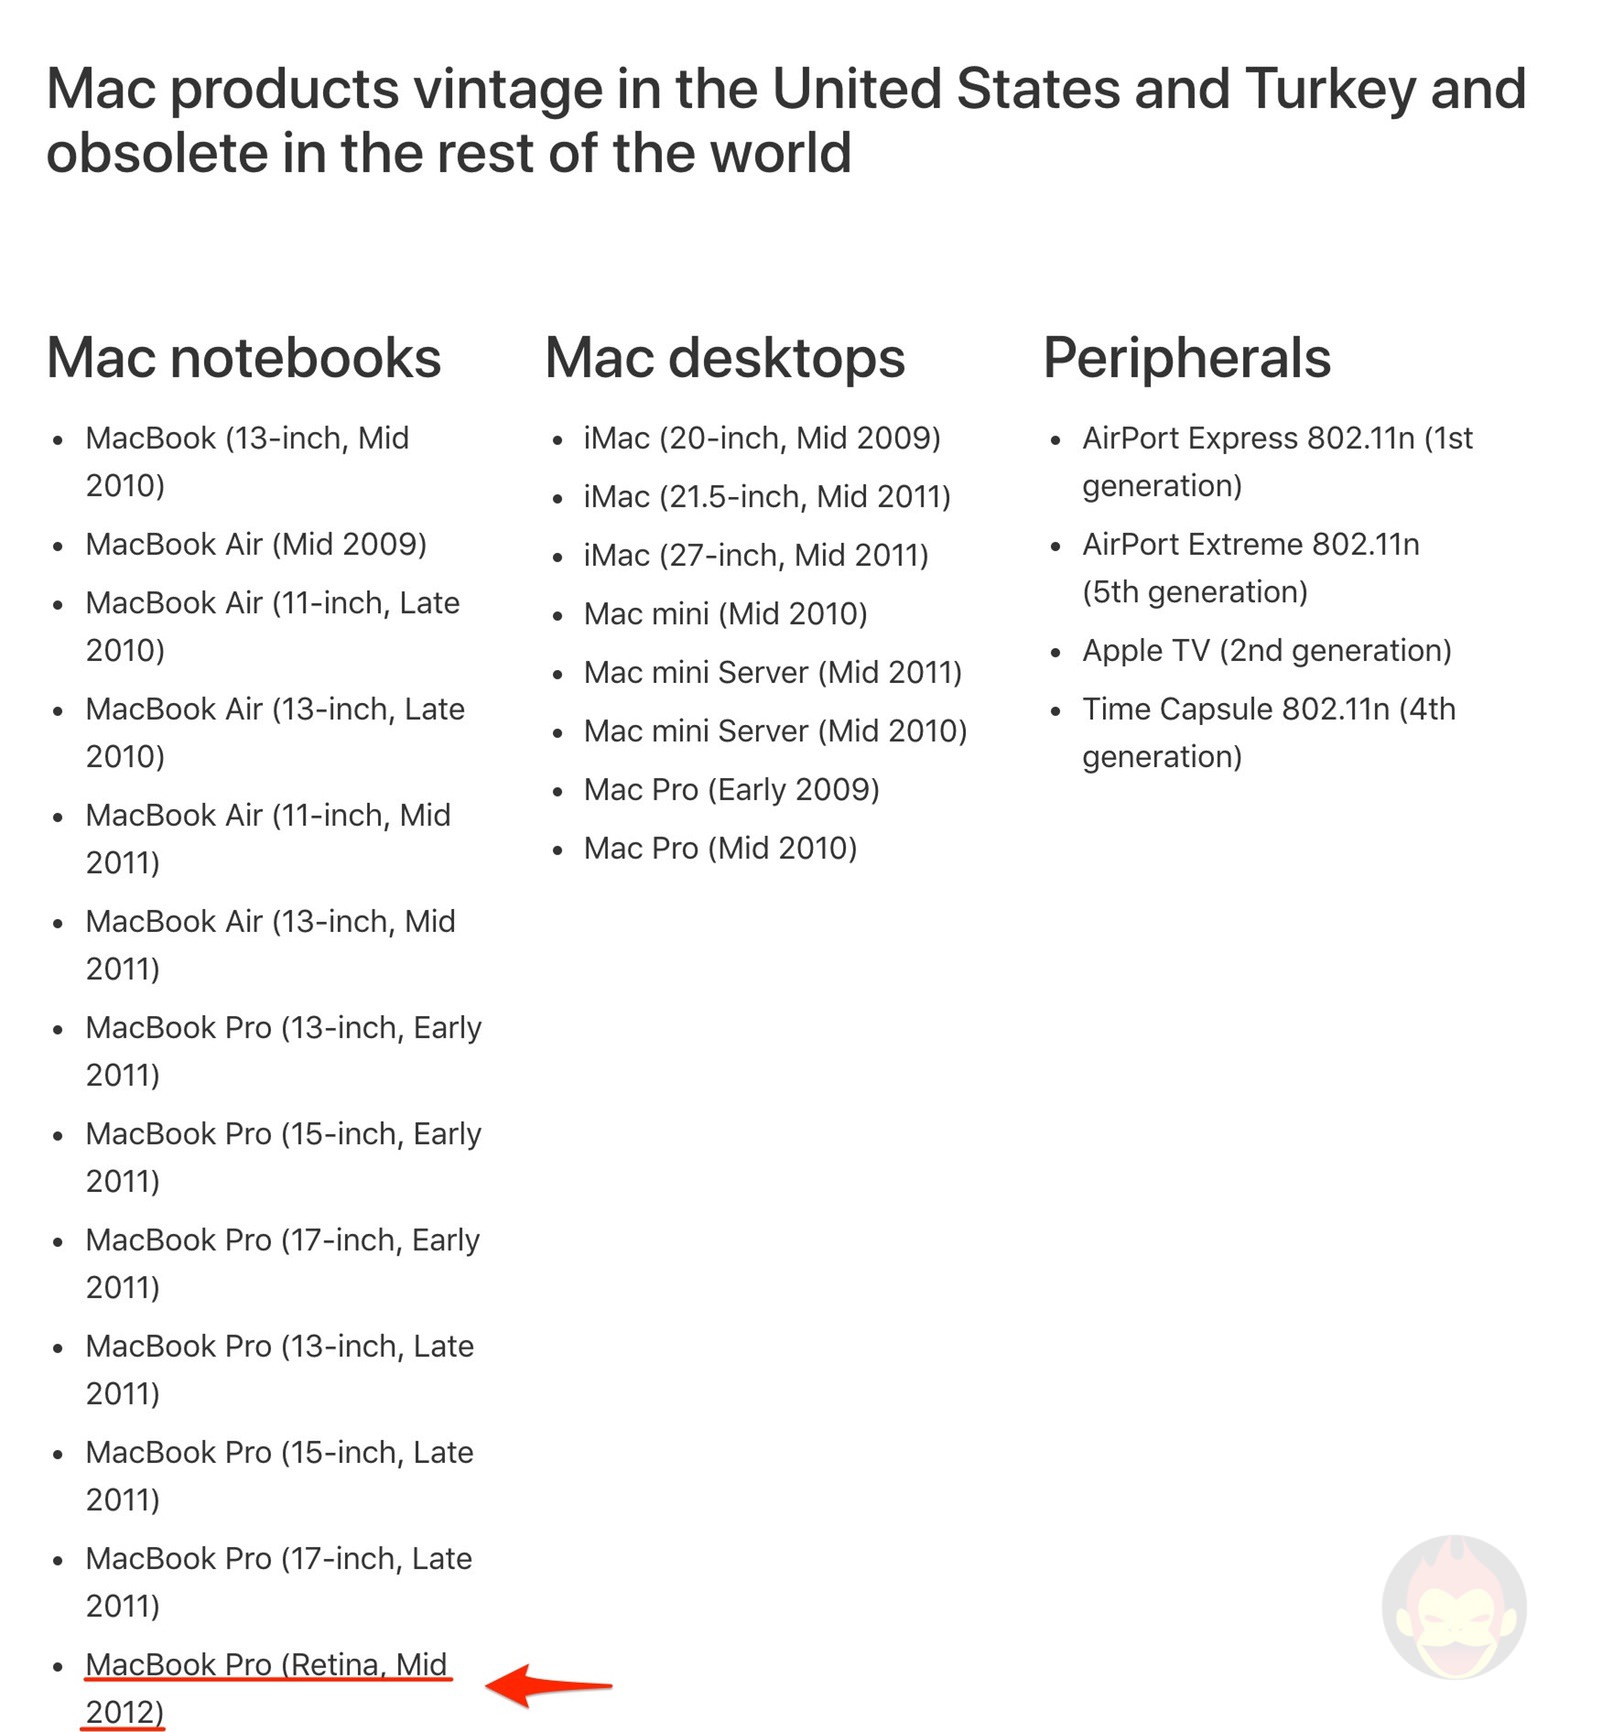 MacBook-Pro-2012-Retina-Obsolete-01.jpg